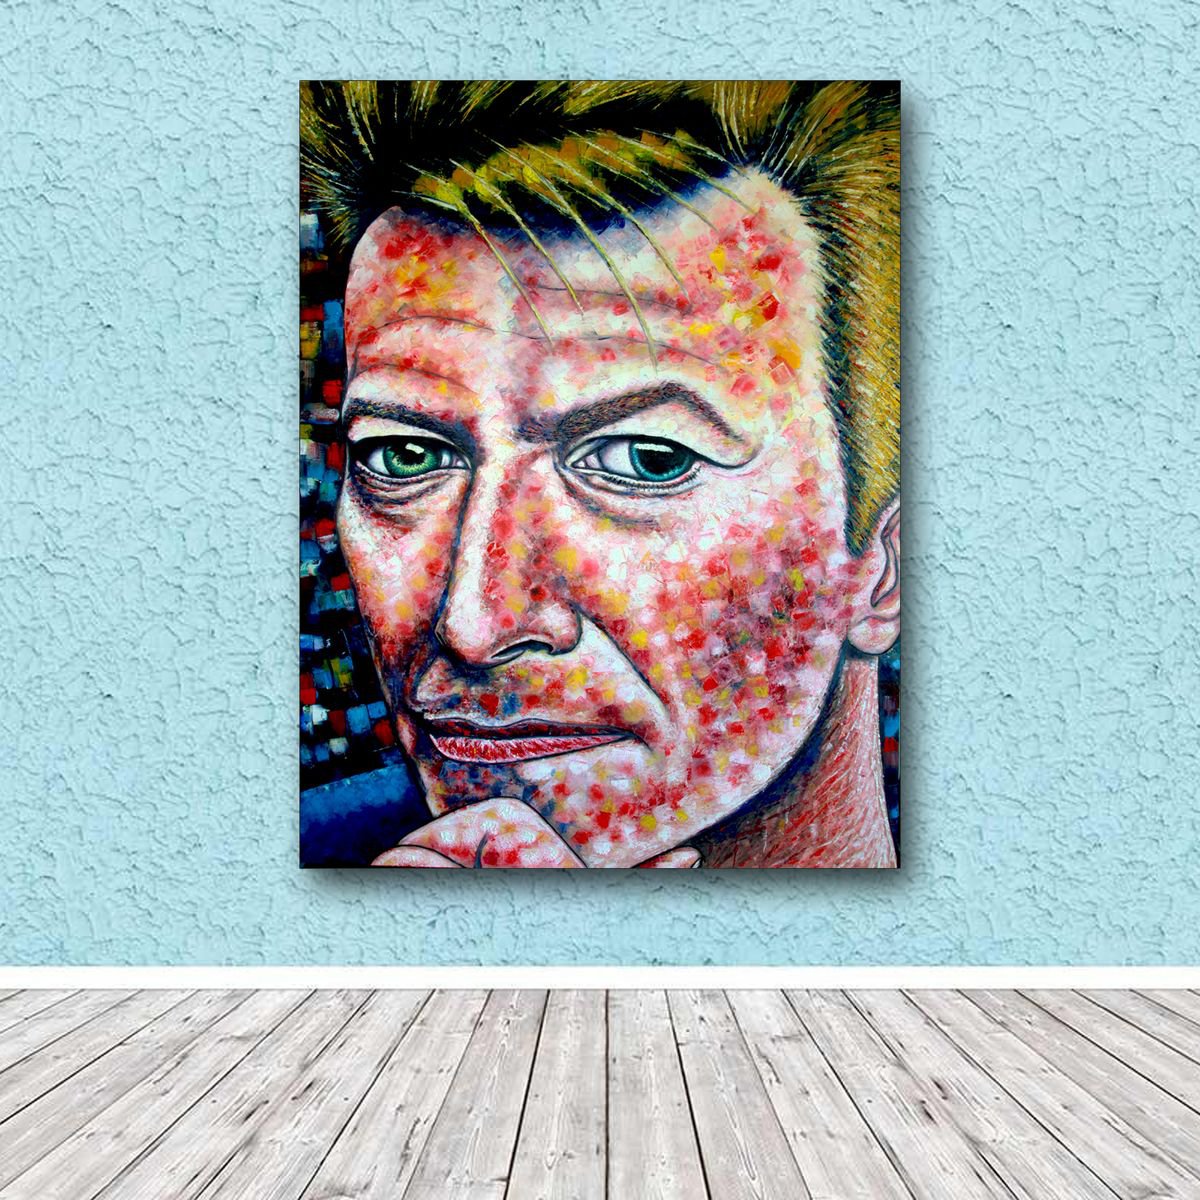 Changes - Large David Bowie Portrait, 36 x 48 oil painting by Preston M. Smith (PMS)